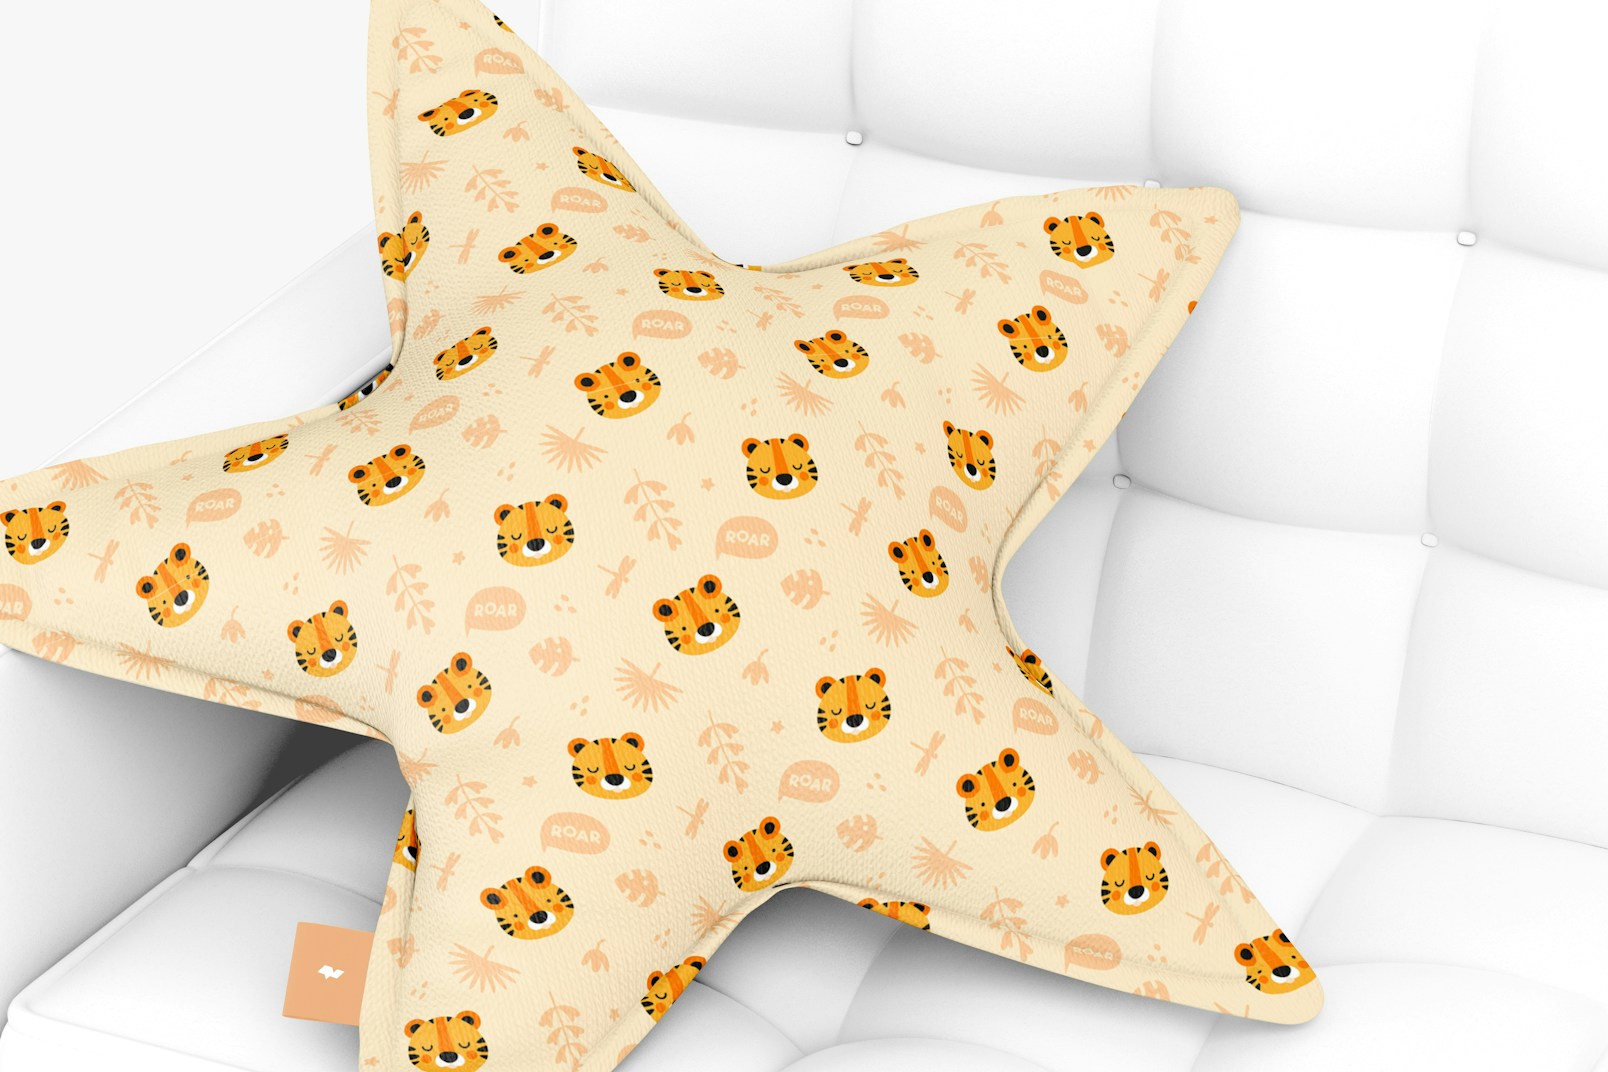 Star Pillow with Sofa Mockup